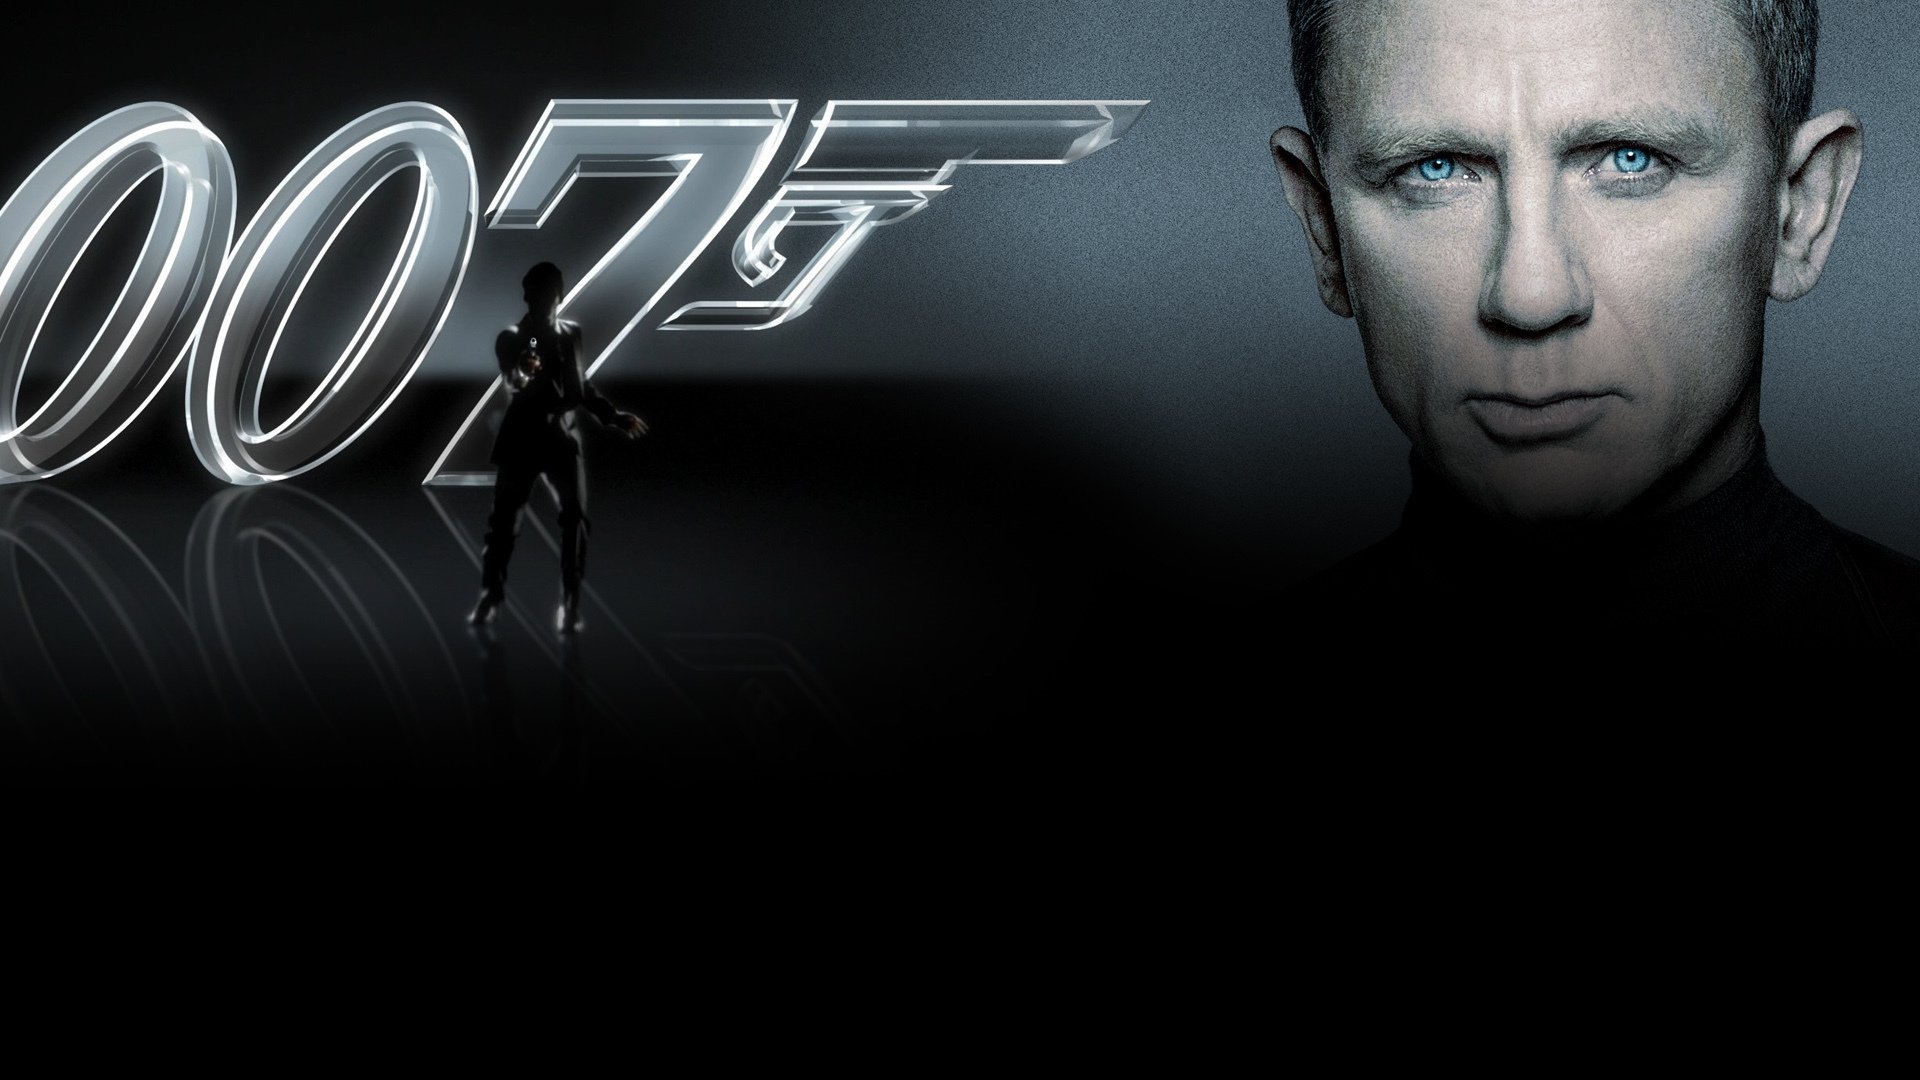 James Bond Spectre Wallpaper